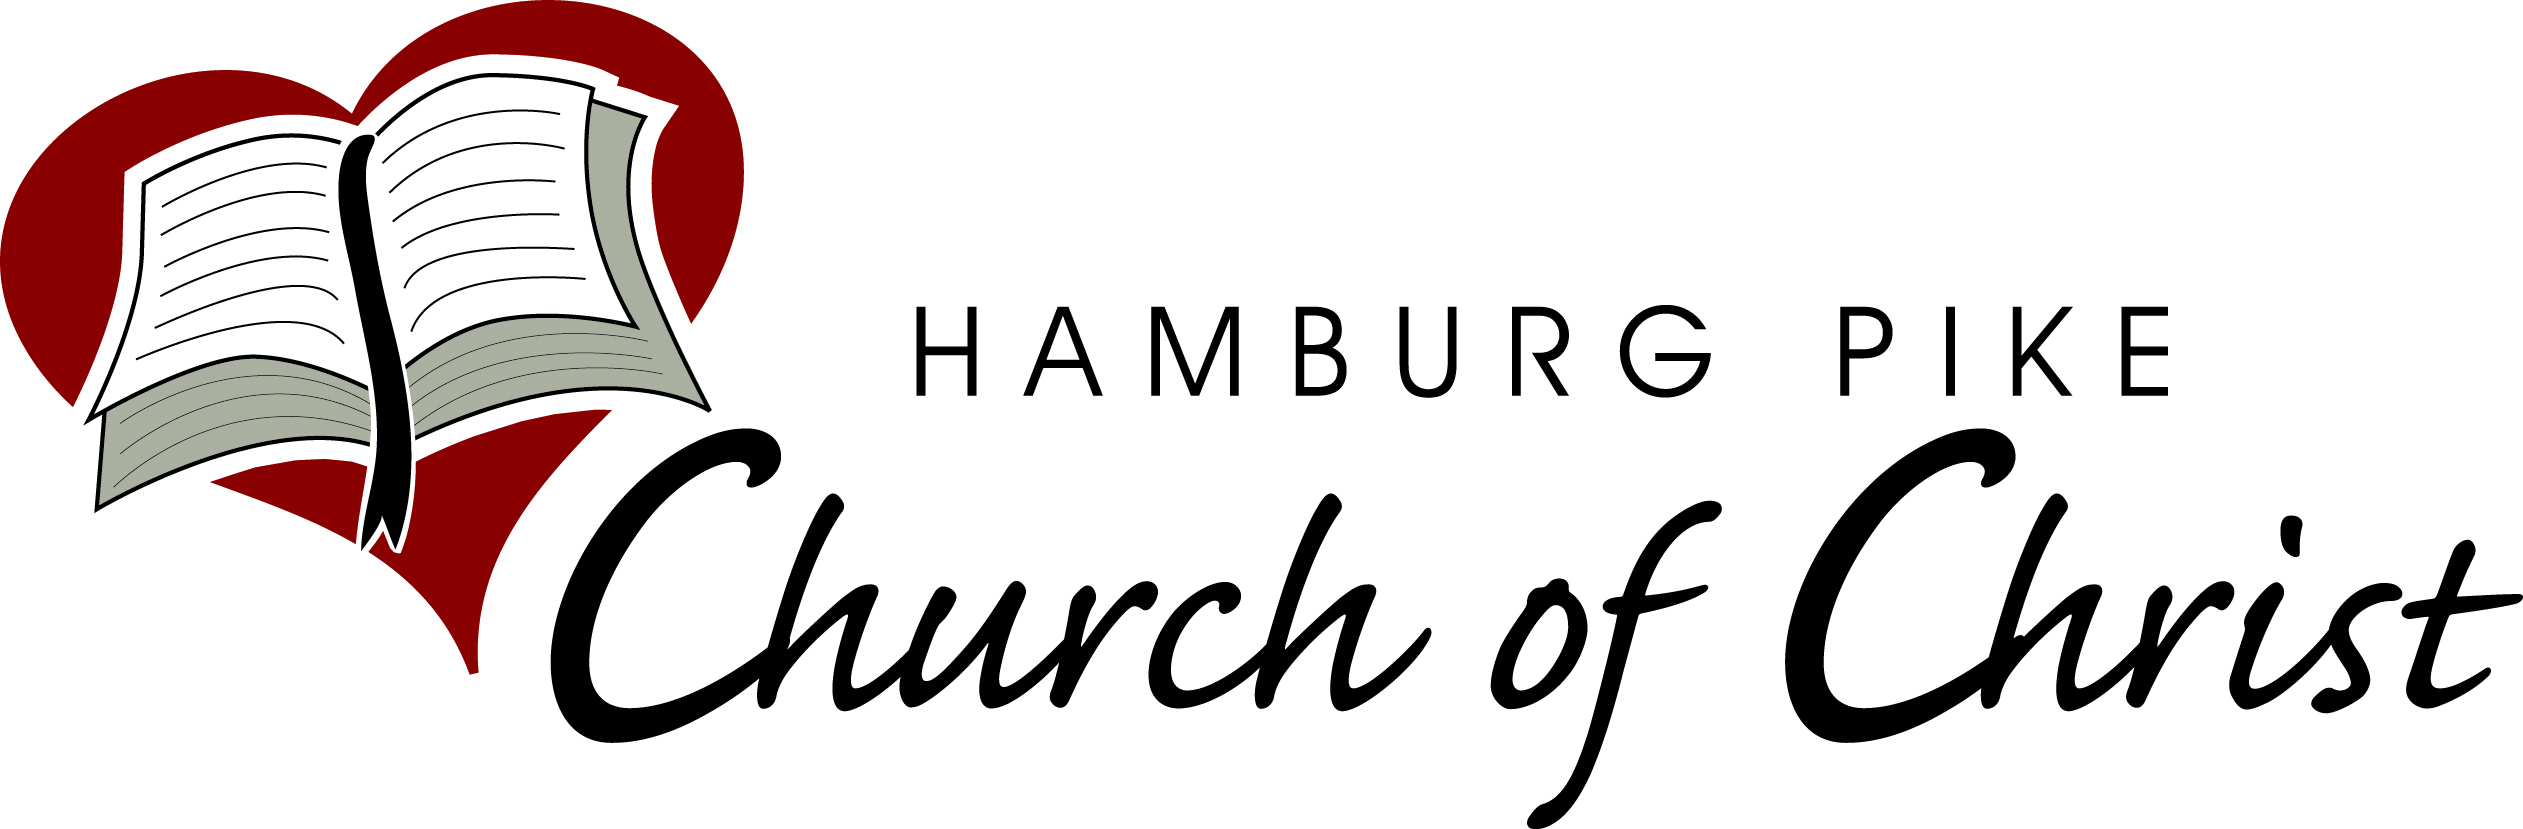 Hamburg Pike Church of Christ